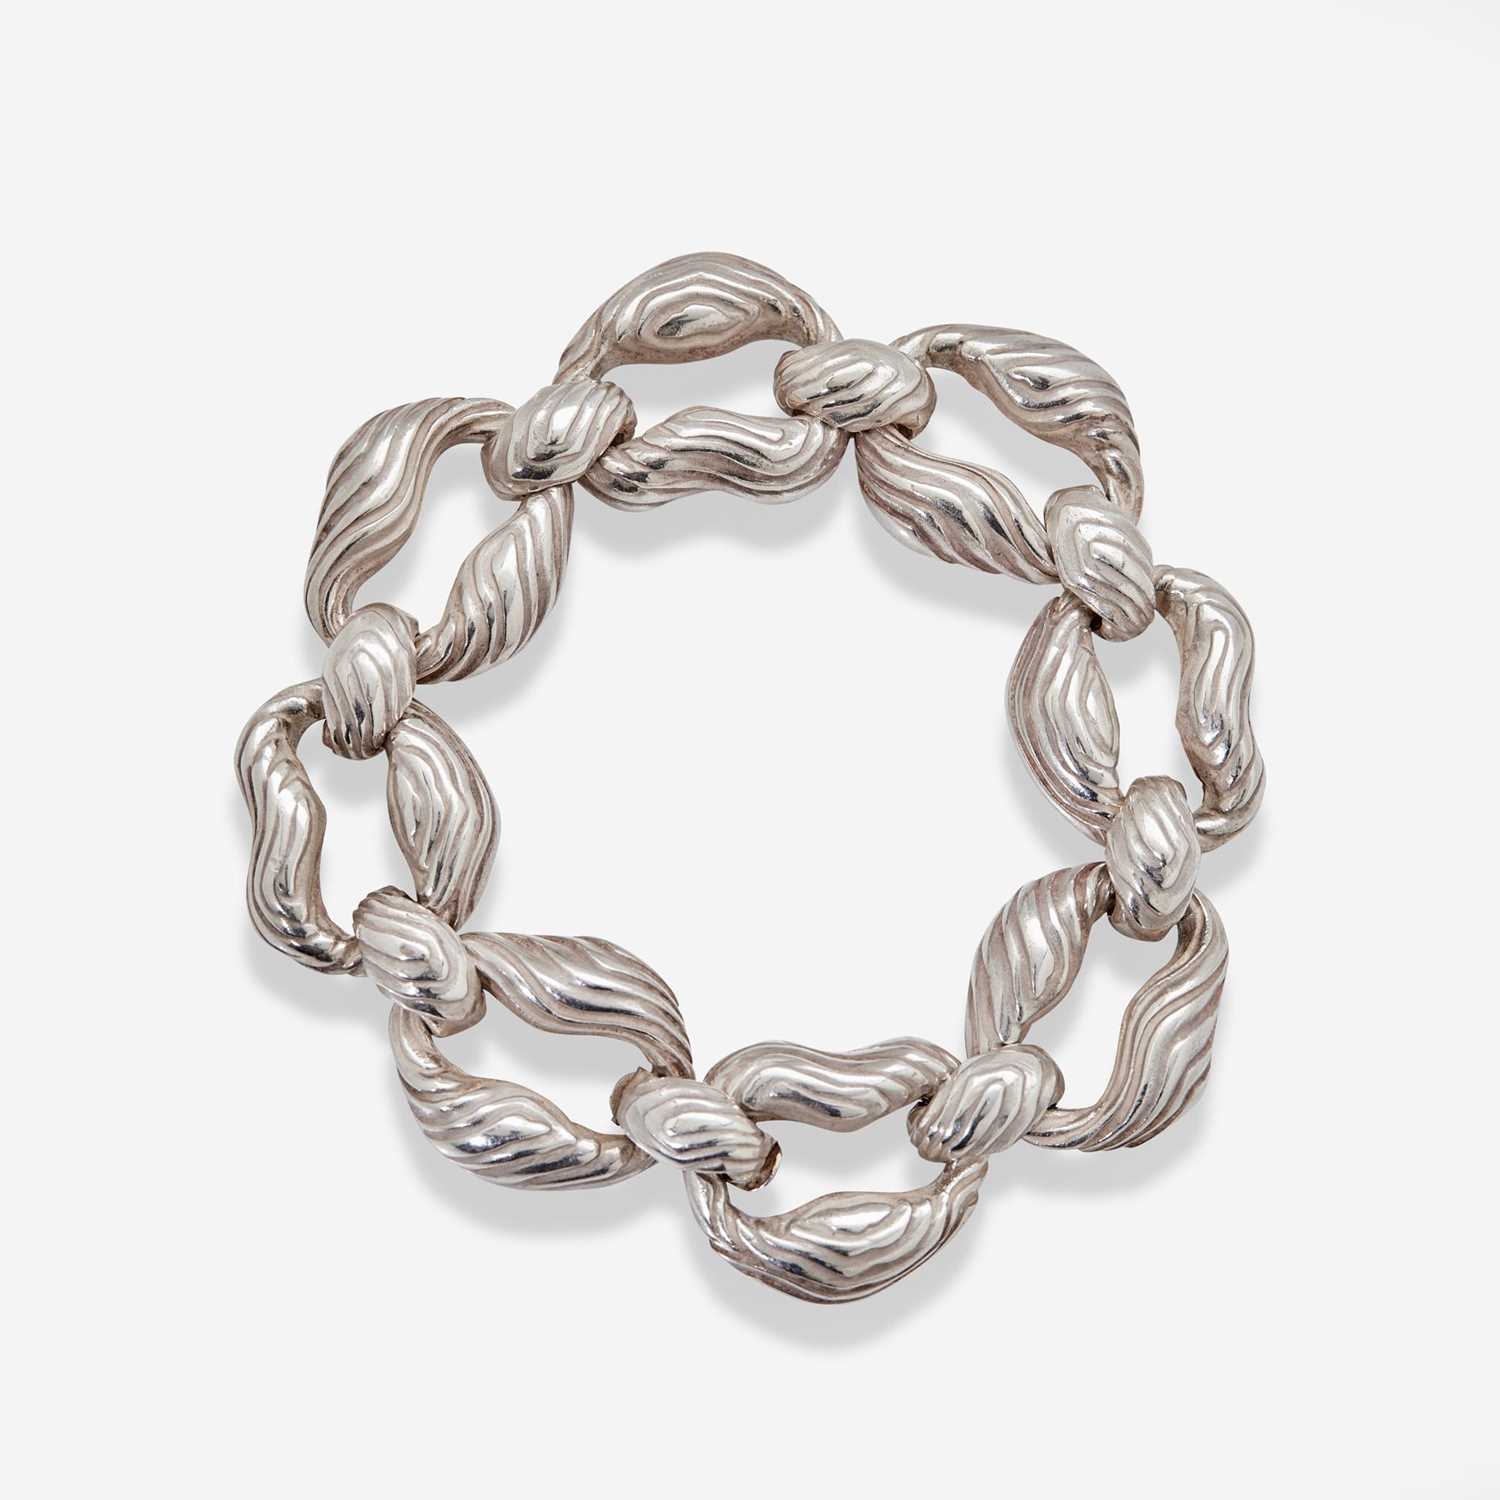 Lot 11 - A Sterling Silver Bracelet by Tiffany & Co.